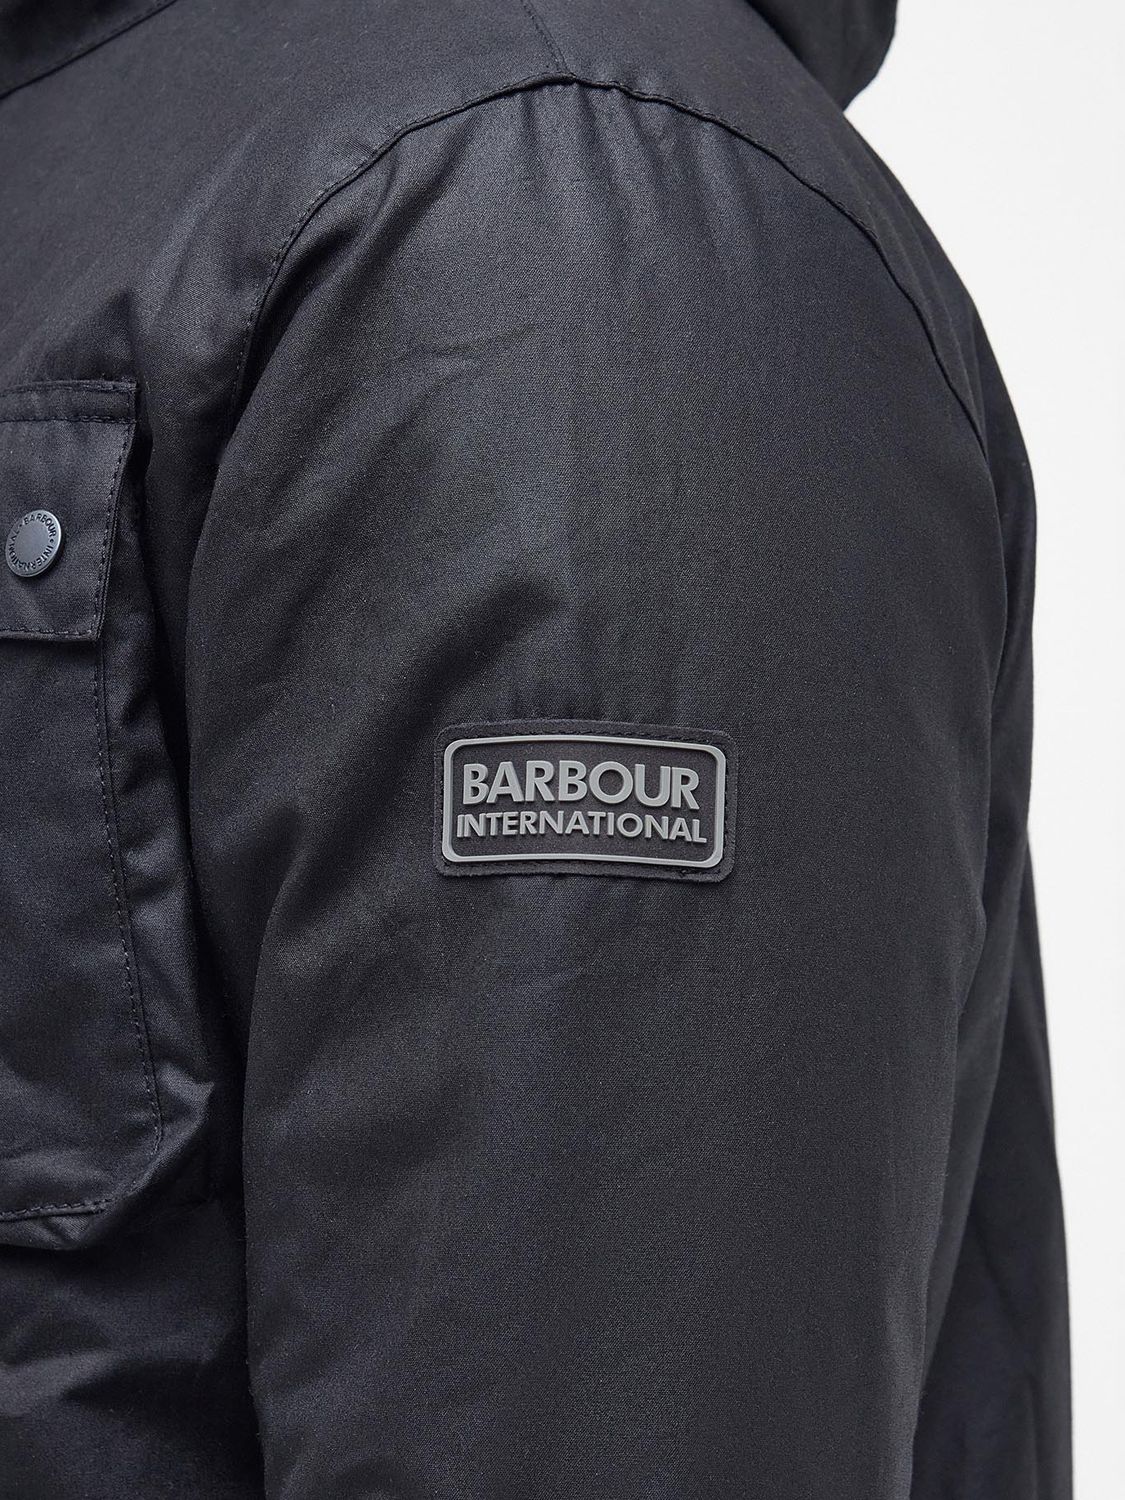 Barbour International Galloway Wax Jacket, Black, L